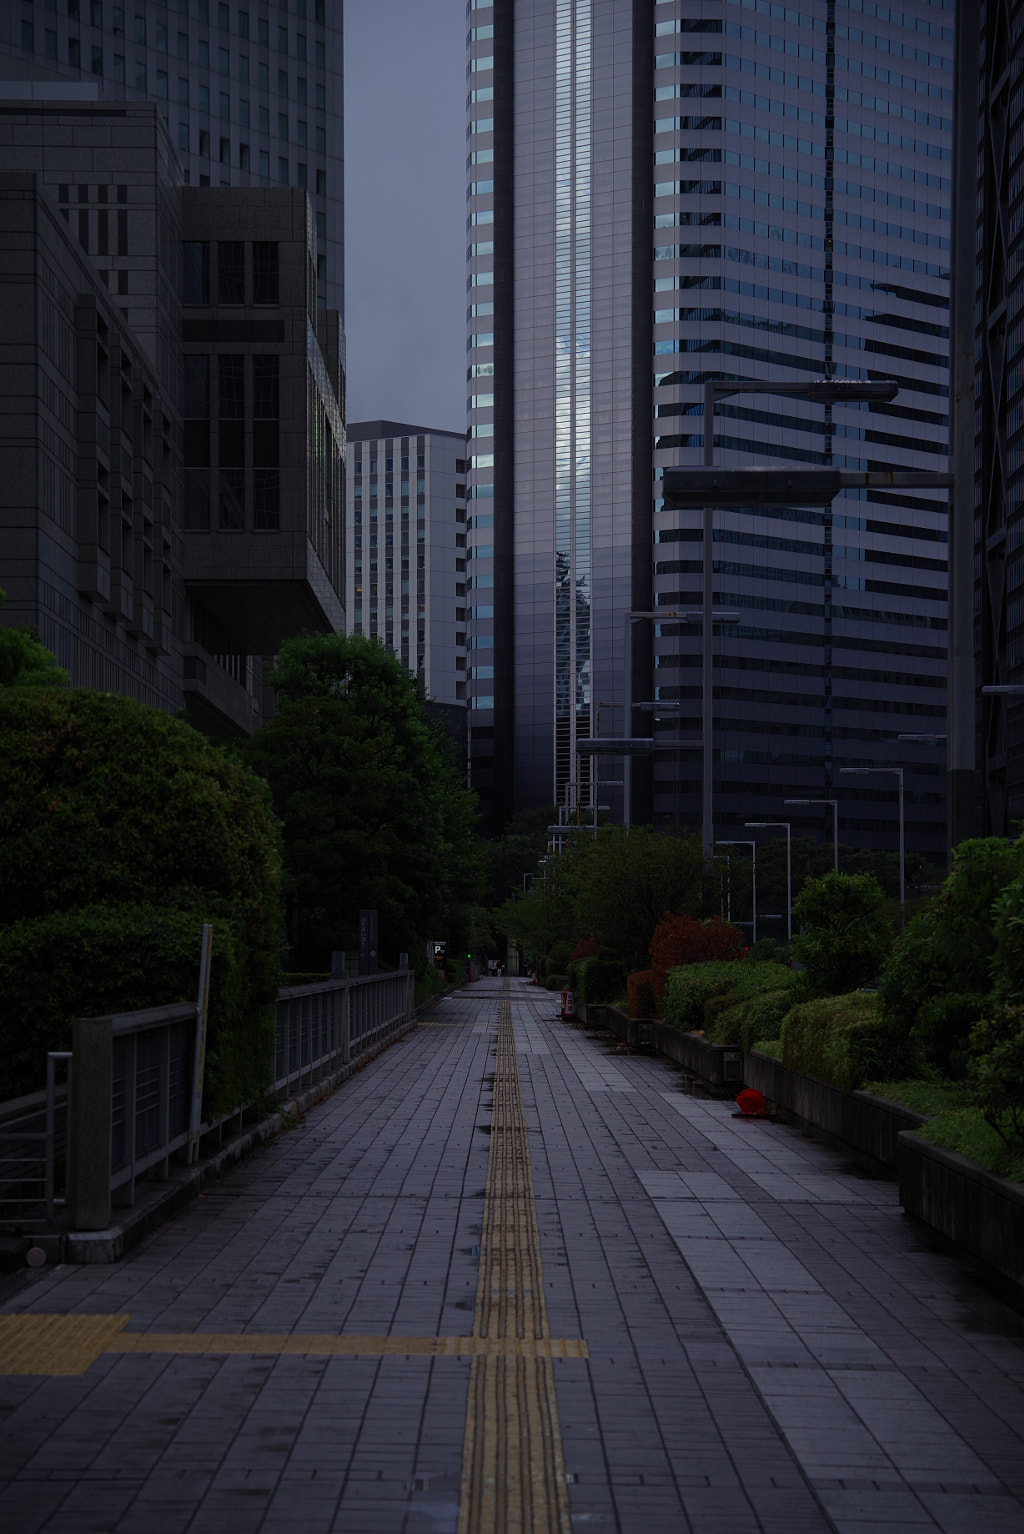 Rainy Day at Shinjuku by wisteria2 kozo on 500px.com